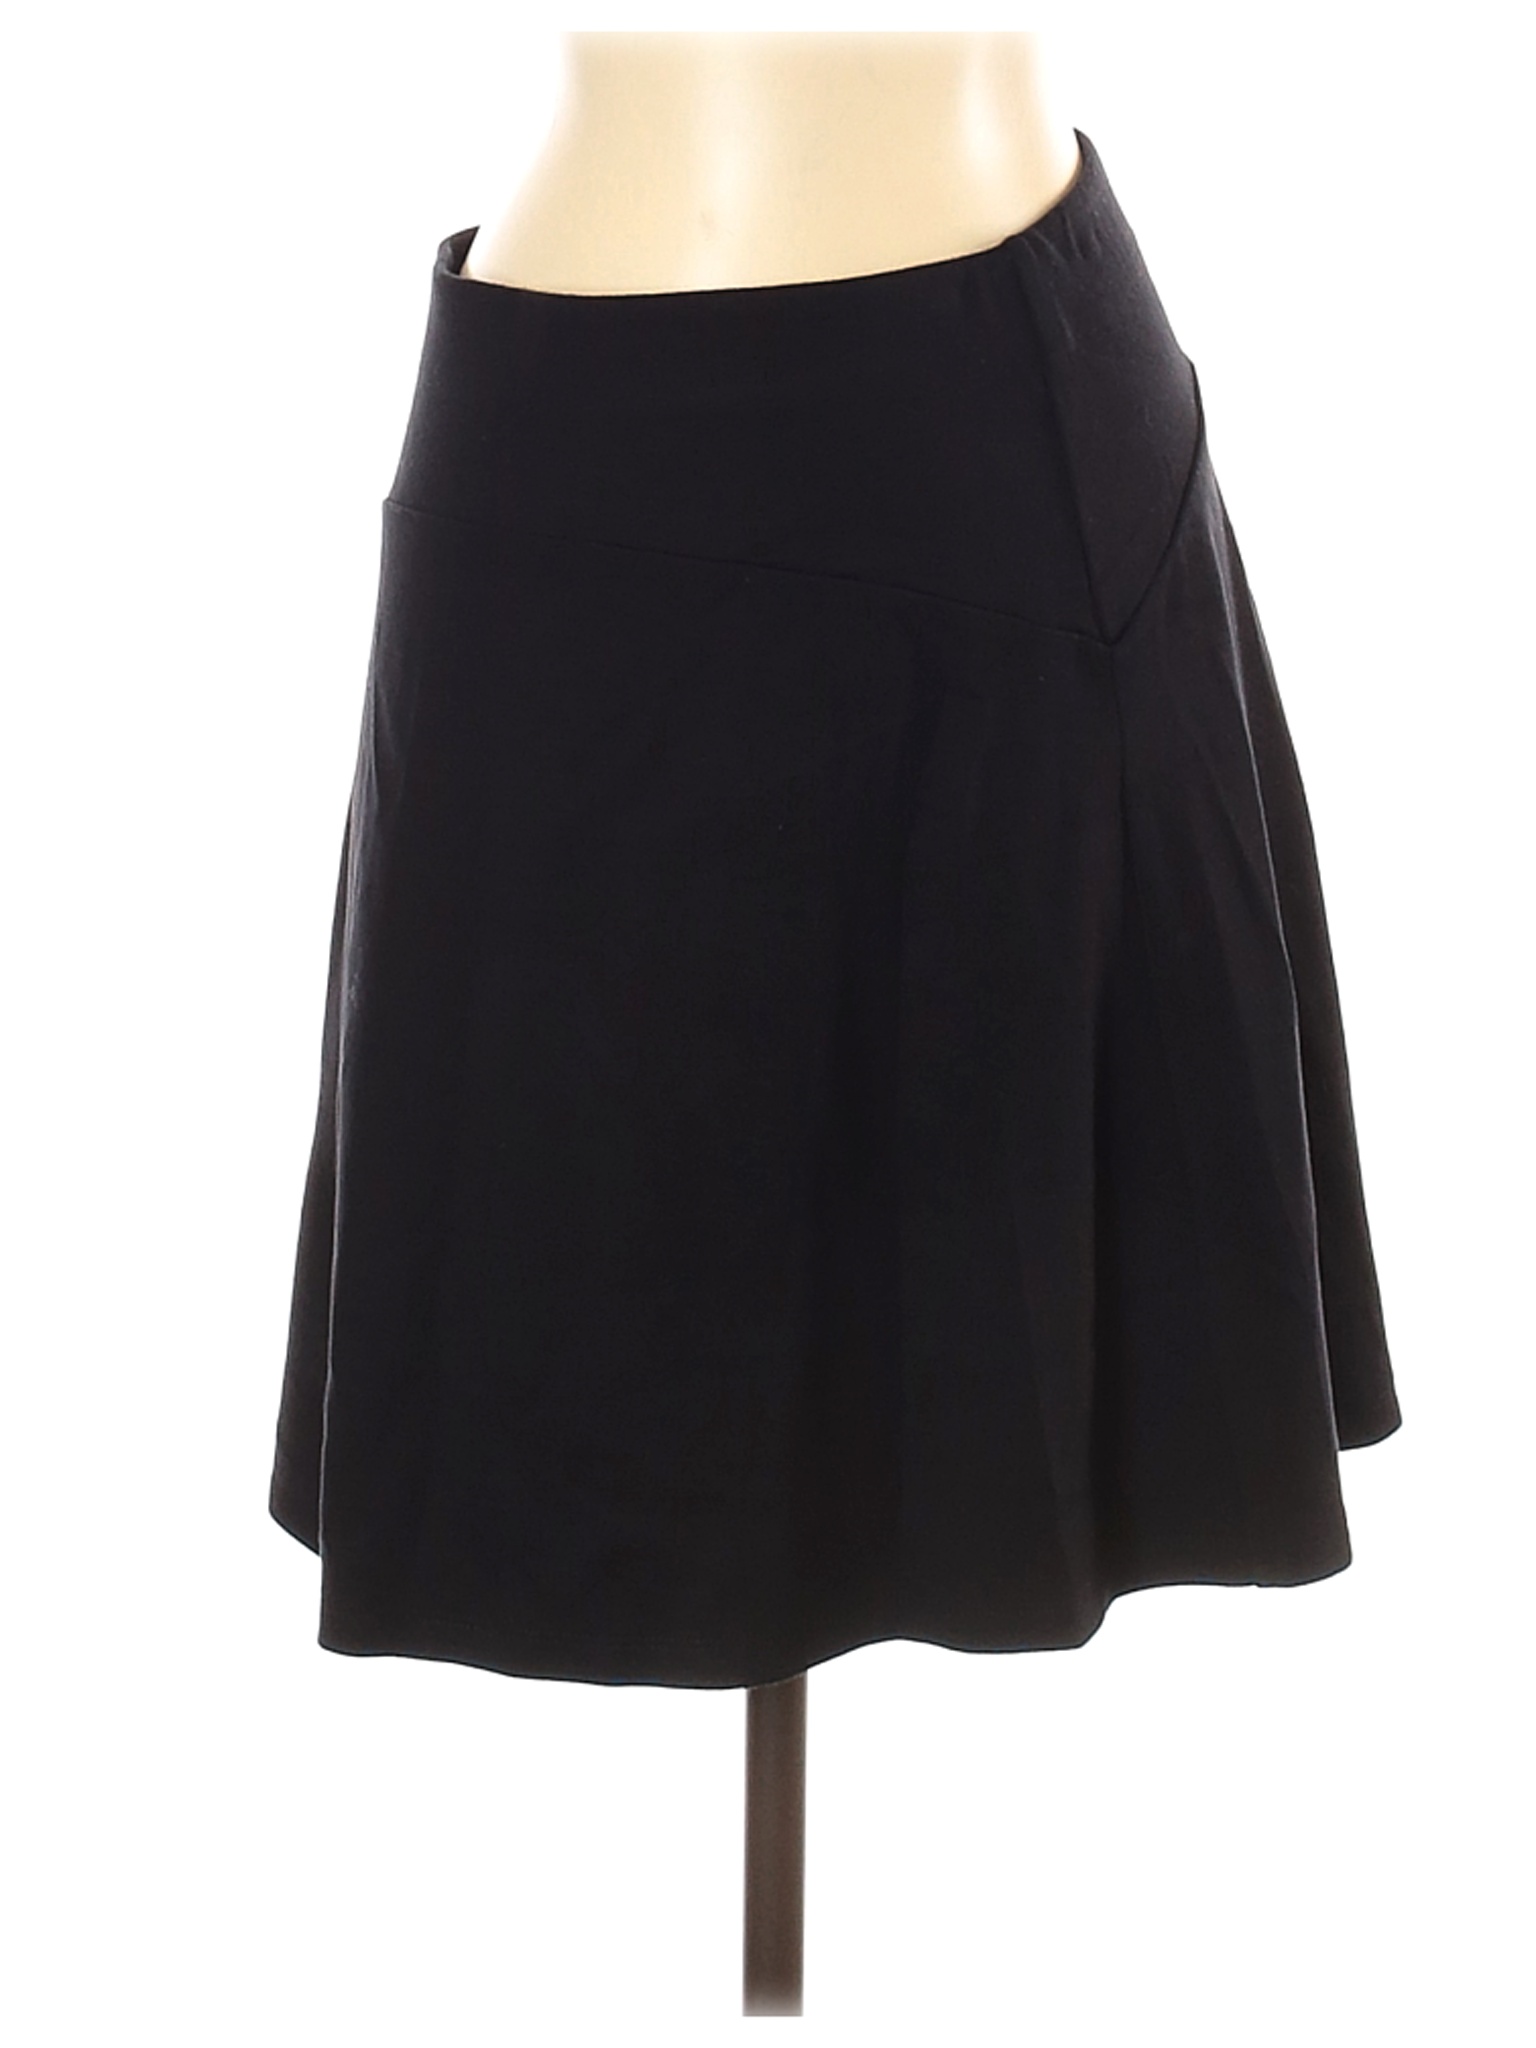 NWT Ann Taylor LOFT Women Black Casual Skirt XS Petites | eBay